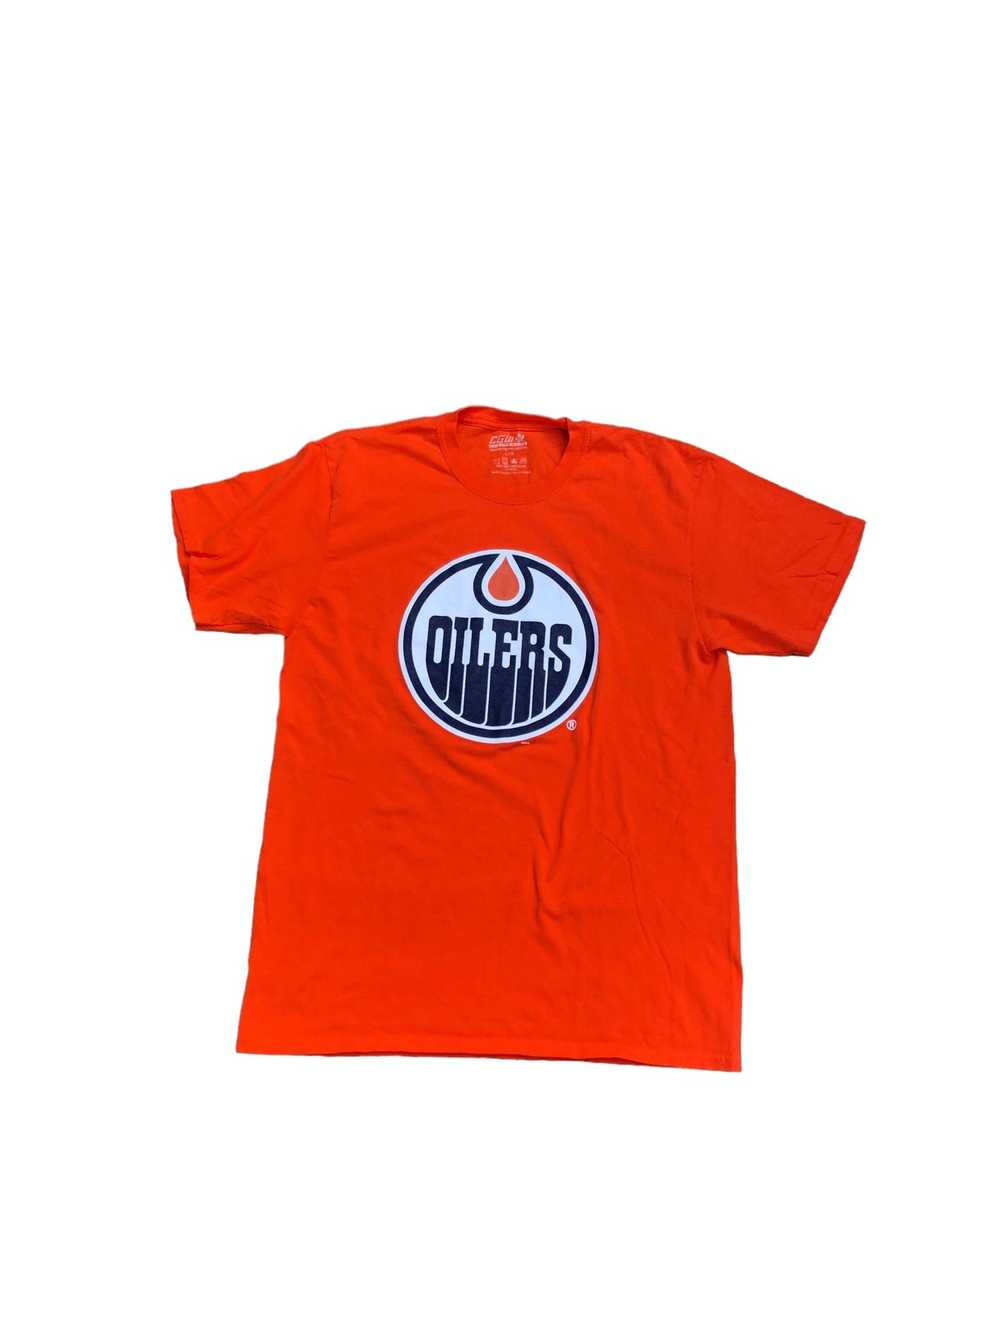 NHL Vintage CGW Edmonton Oilers Shirt Orange Large - image 3